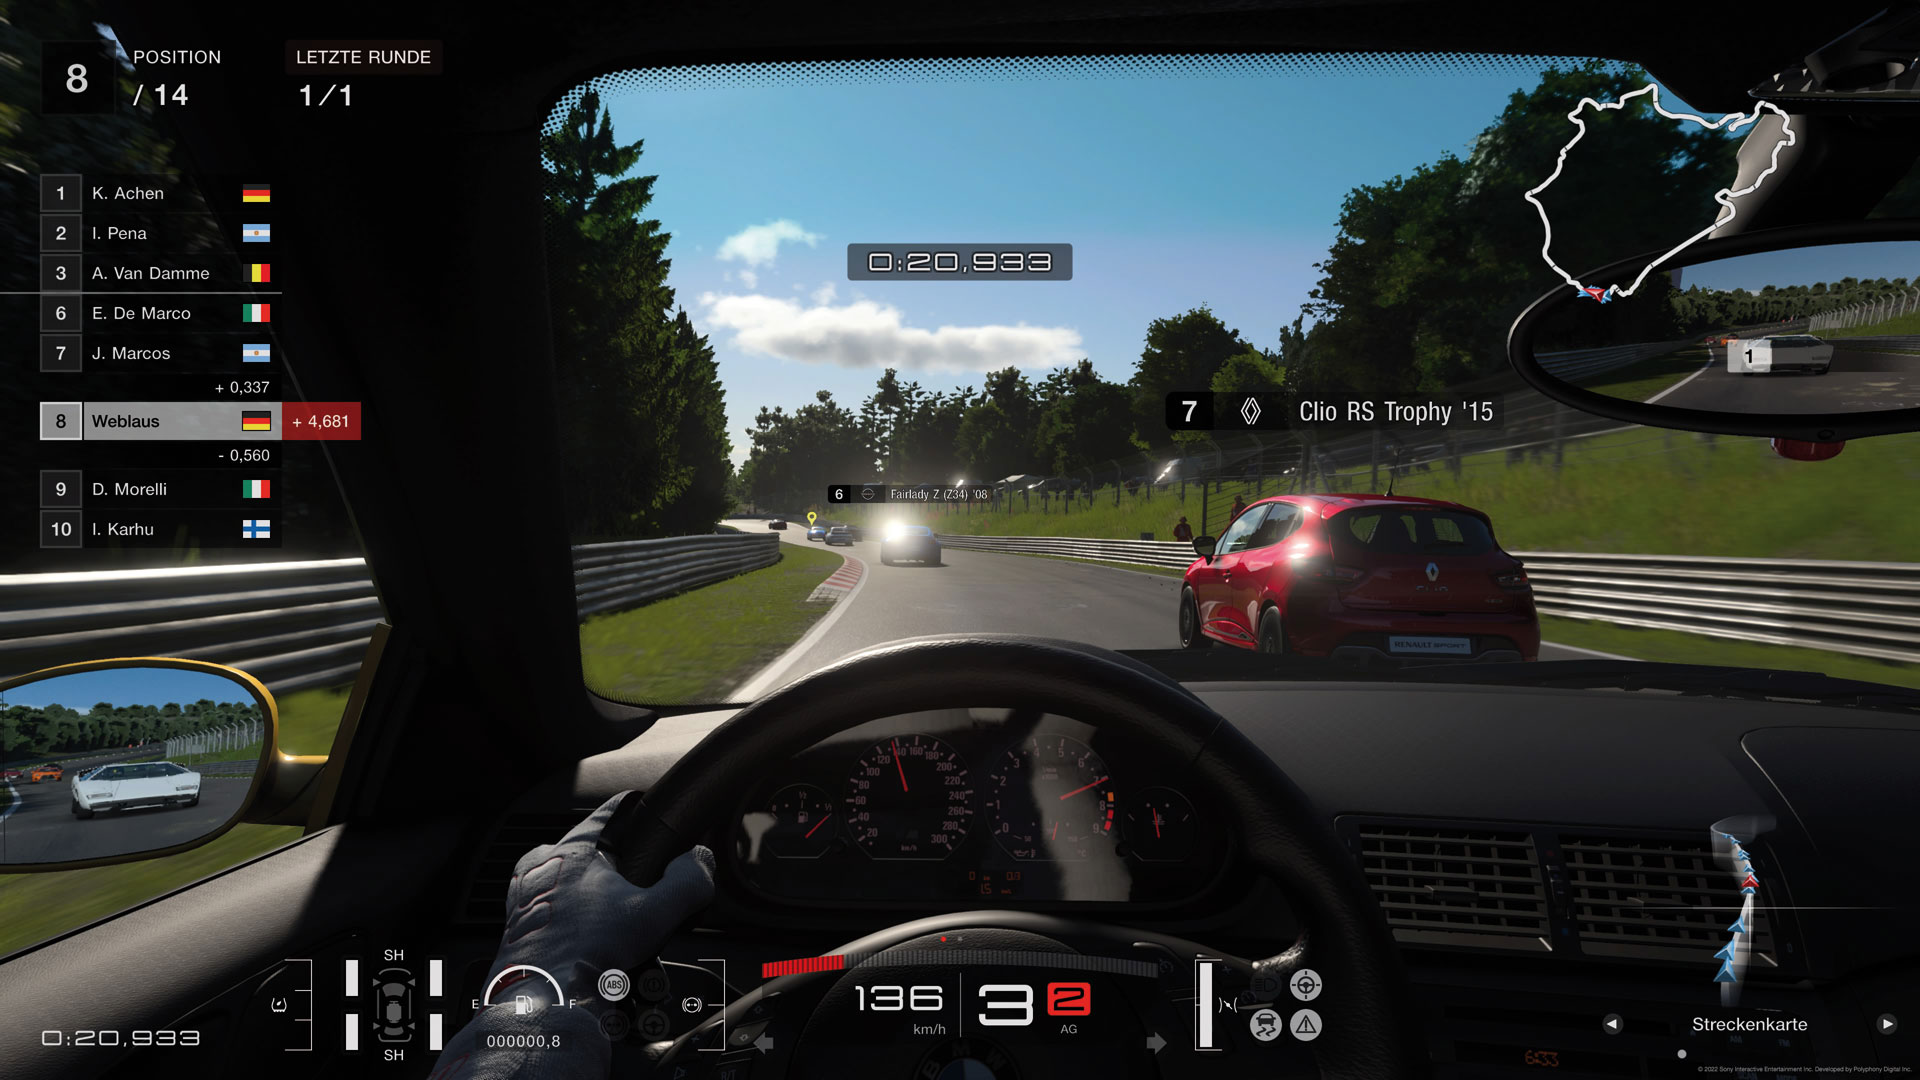 Gran Turismo 7 – im Test (PS4 / PS5)